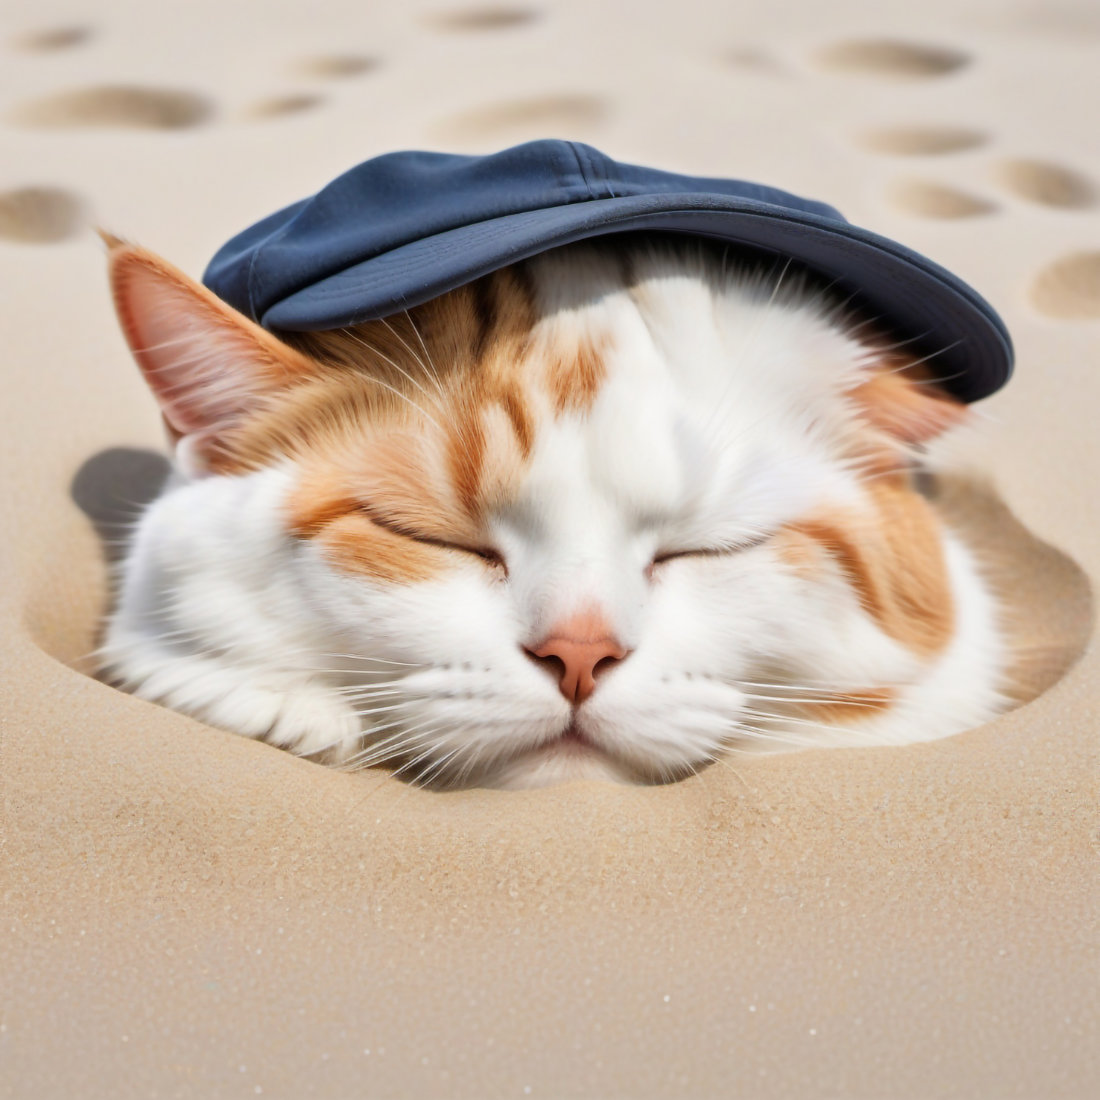 53cat sleep on the sandy beach wearing cap 633